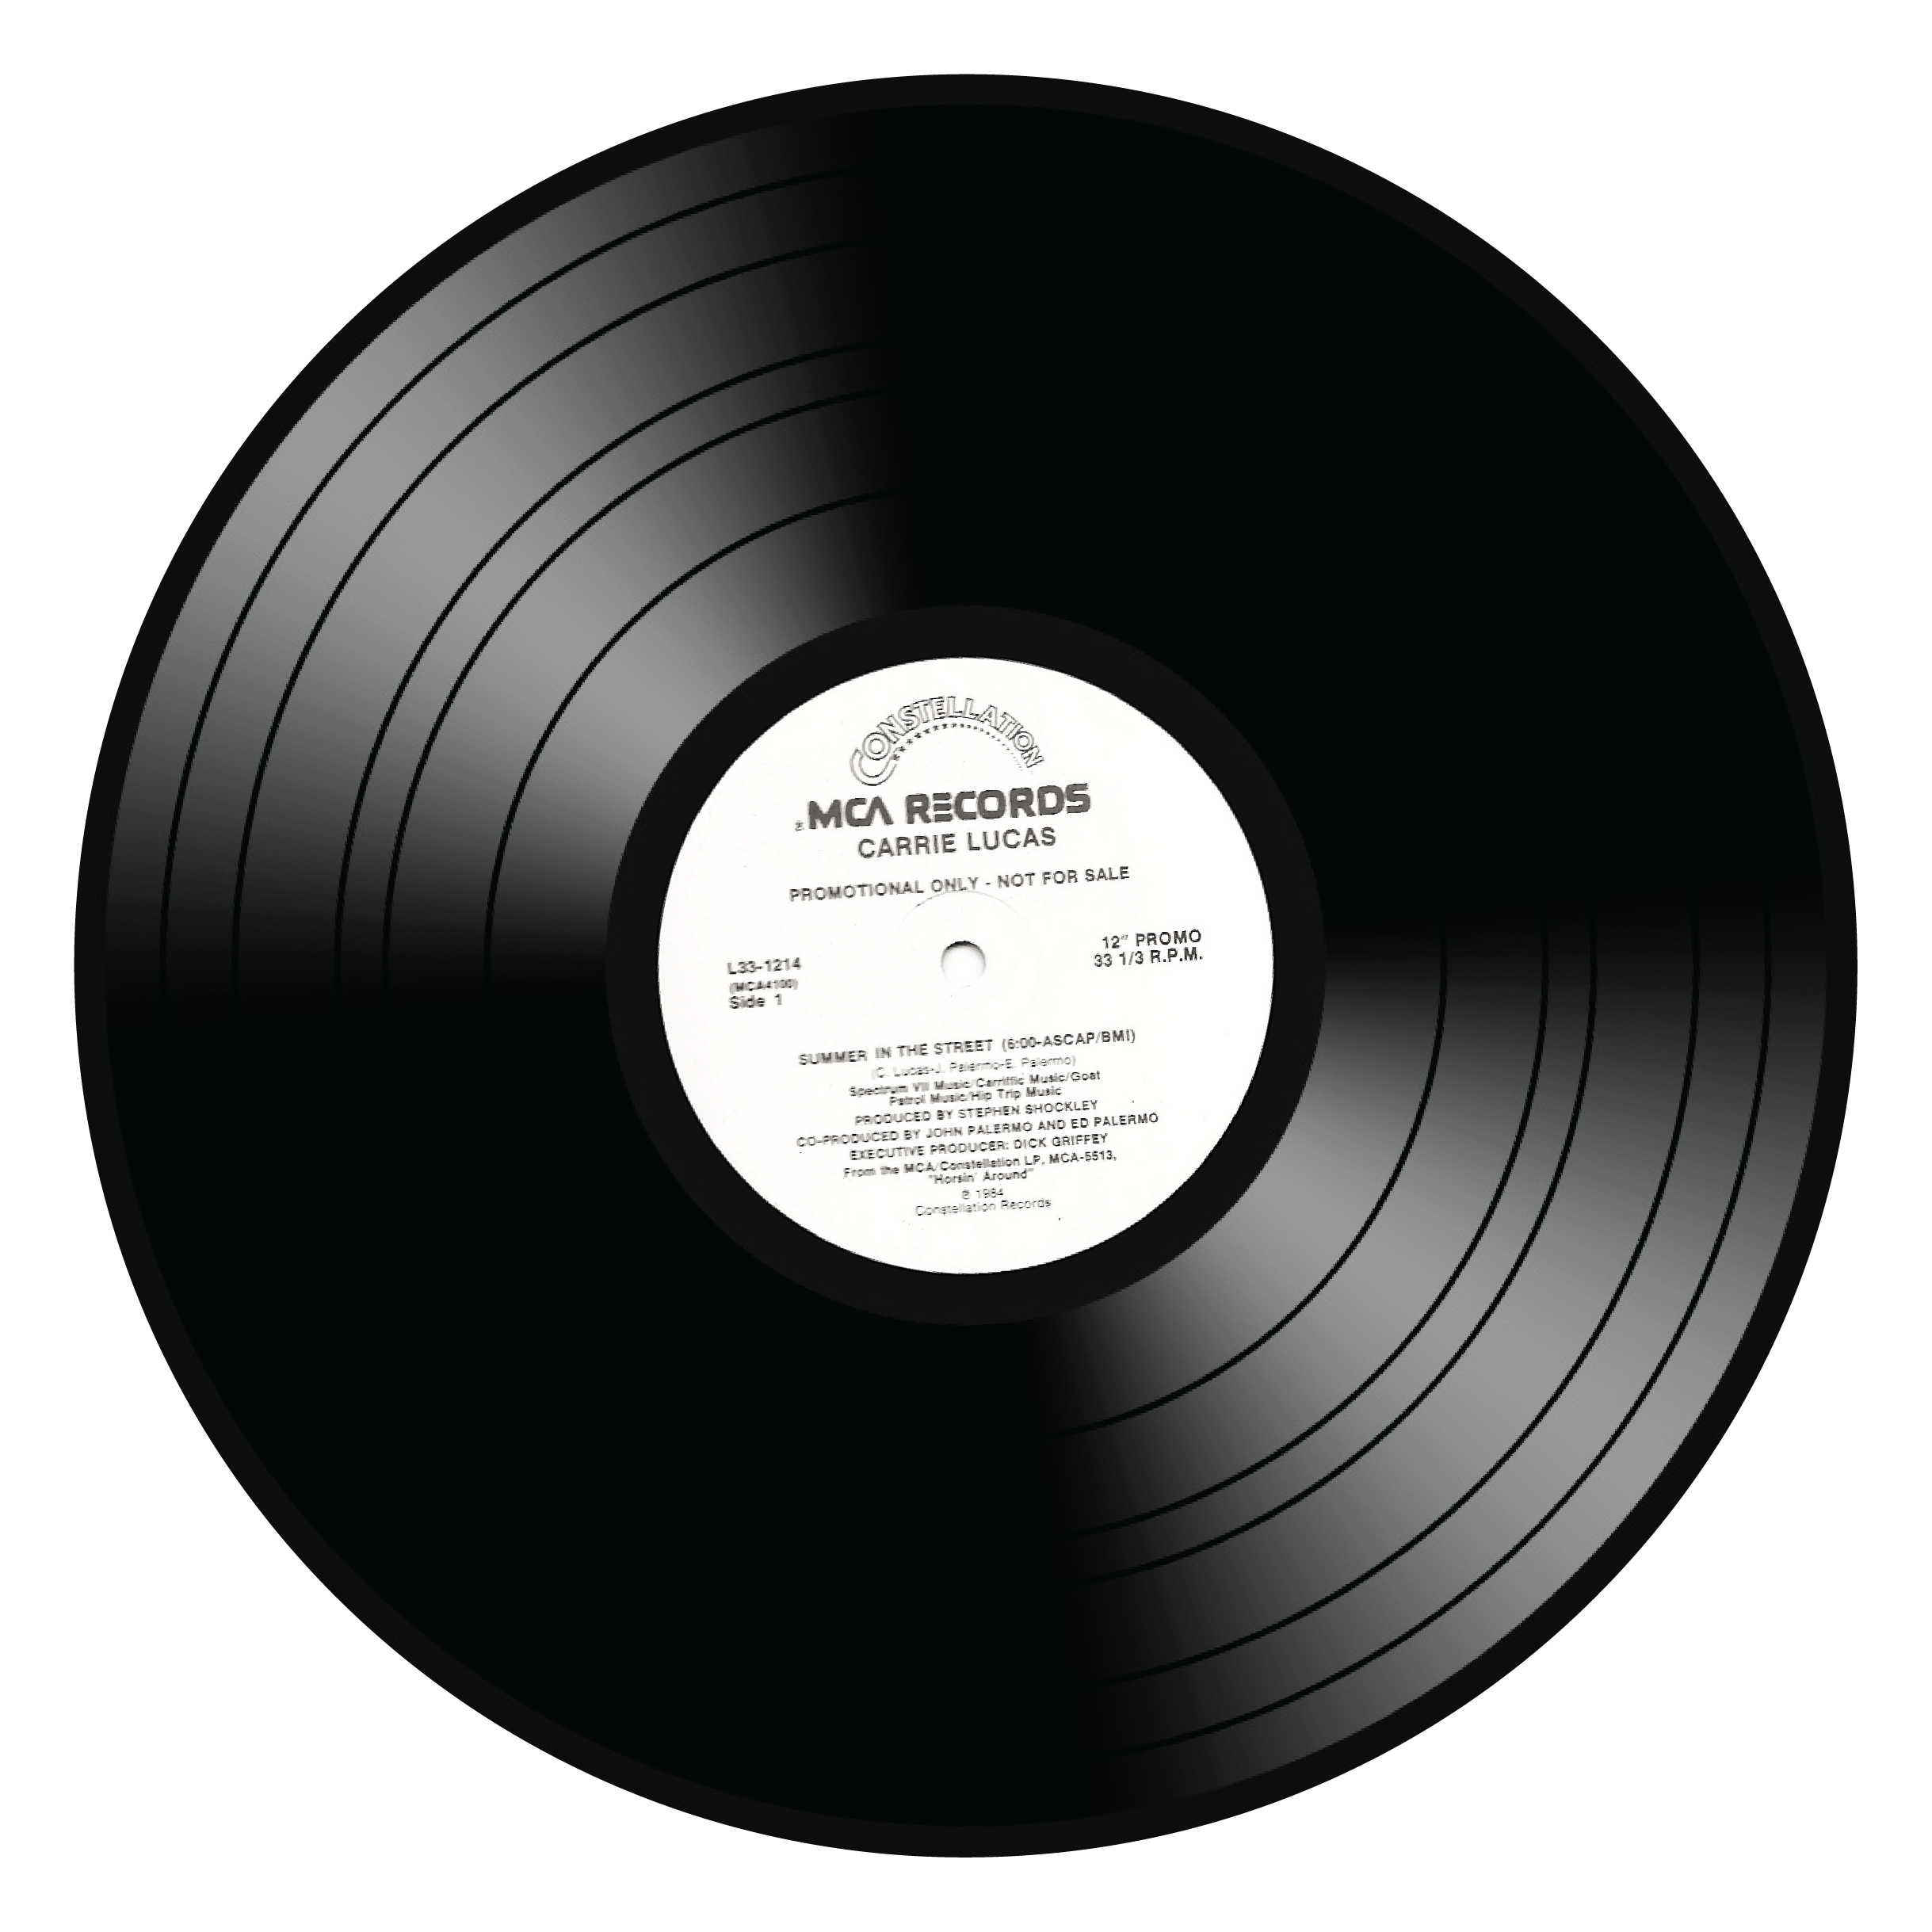 Free Vinyl Record Cliparts, Download Free Clip Art, Free ...
